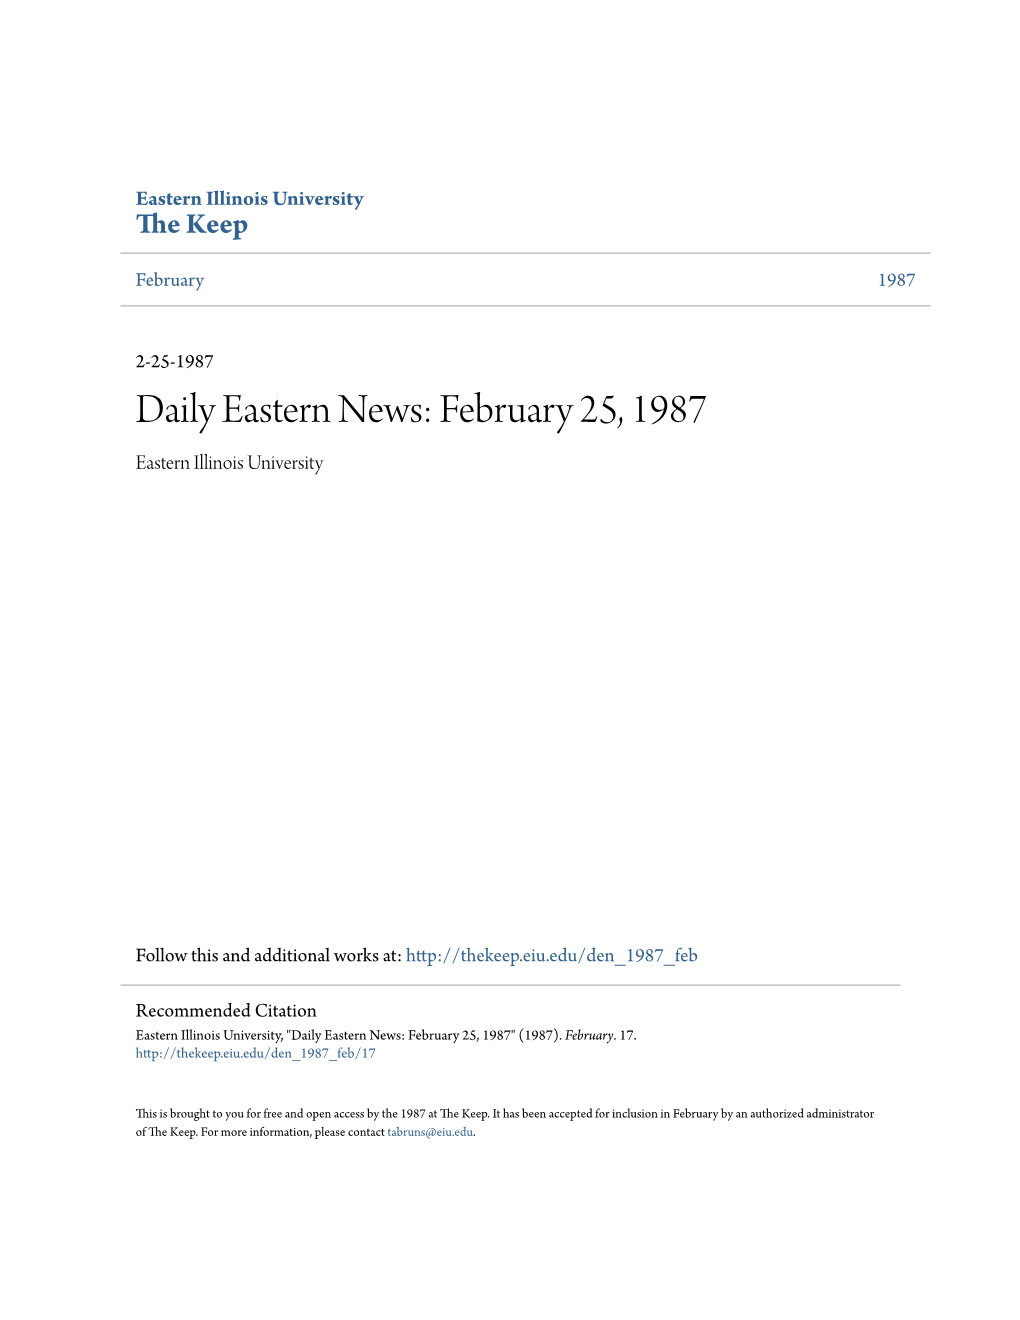 Daily Eastern News: February 25, 1987 Eastern Illinois University